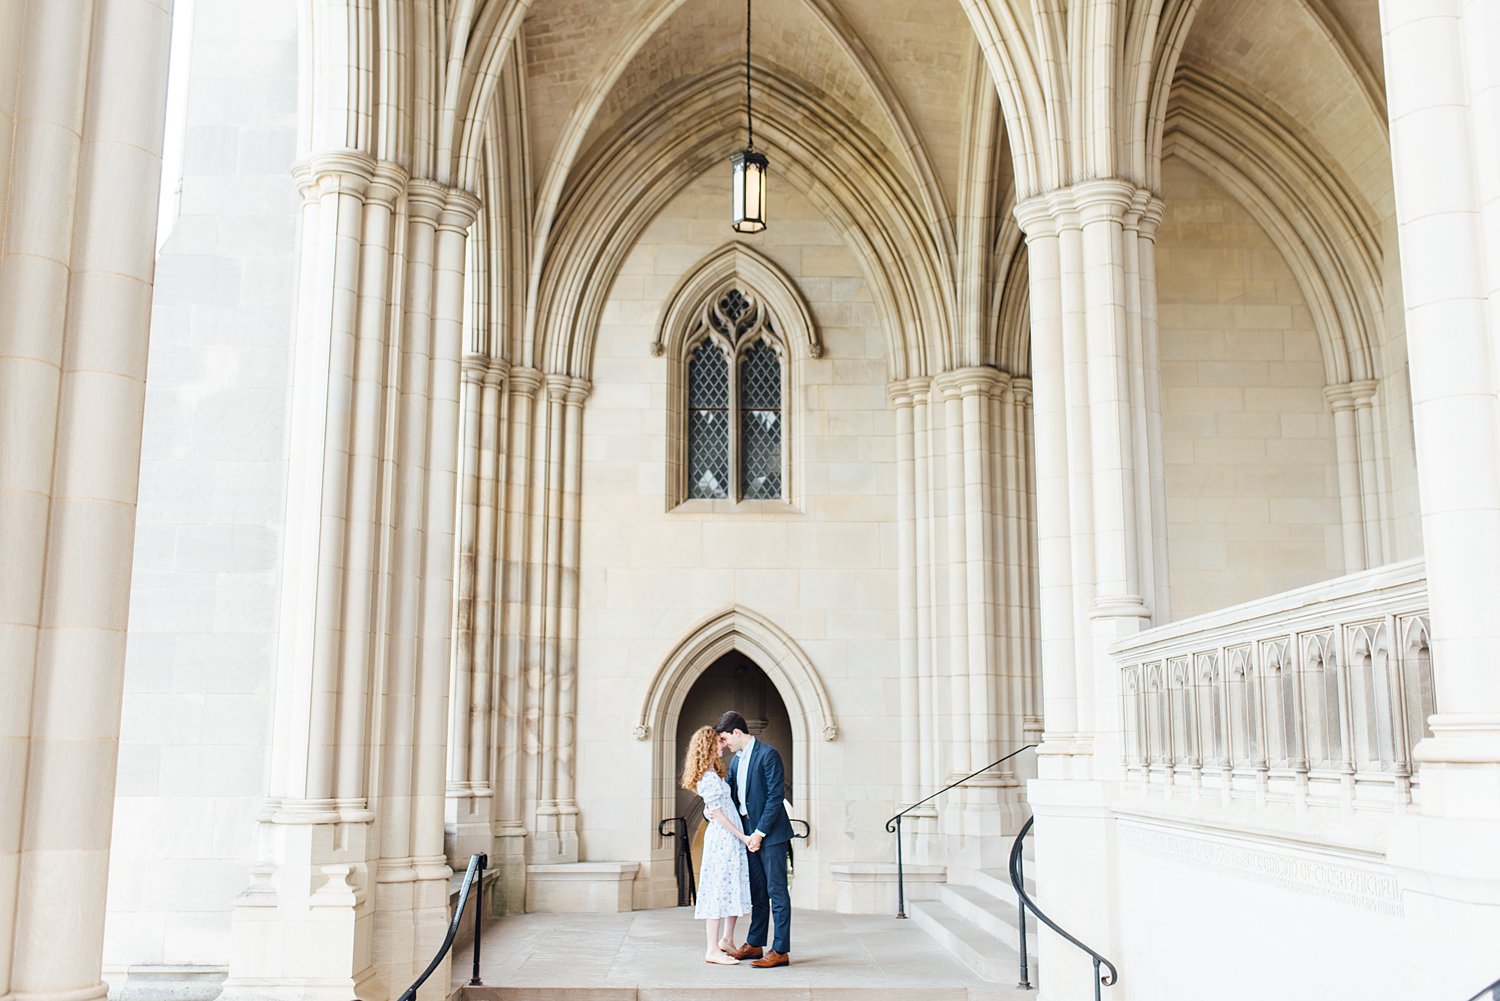 Allie + James - National Cathedral Engagement Session - Washington DC Wedding Photographer - Alison Dunn Photography photo